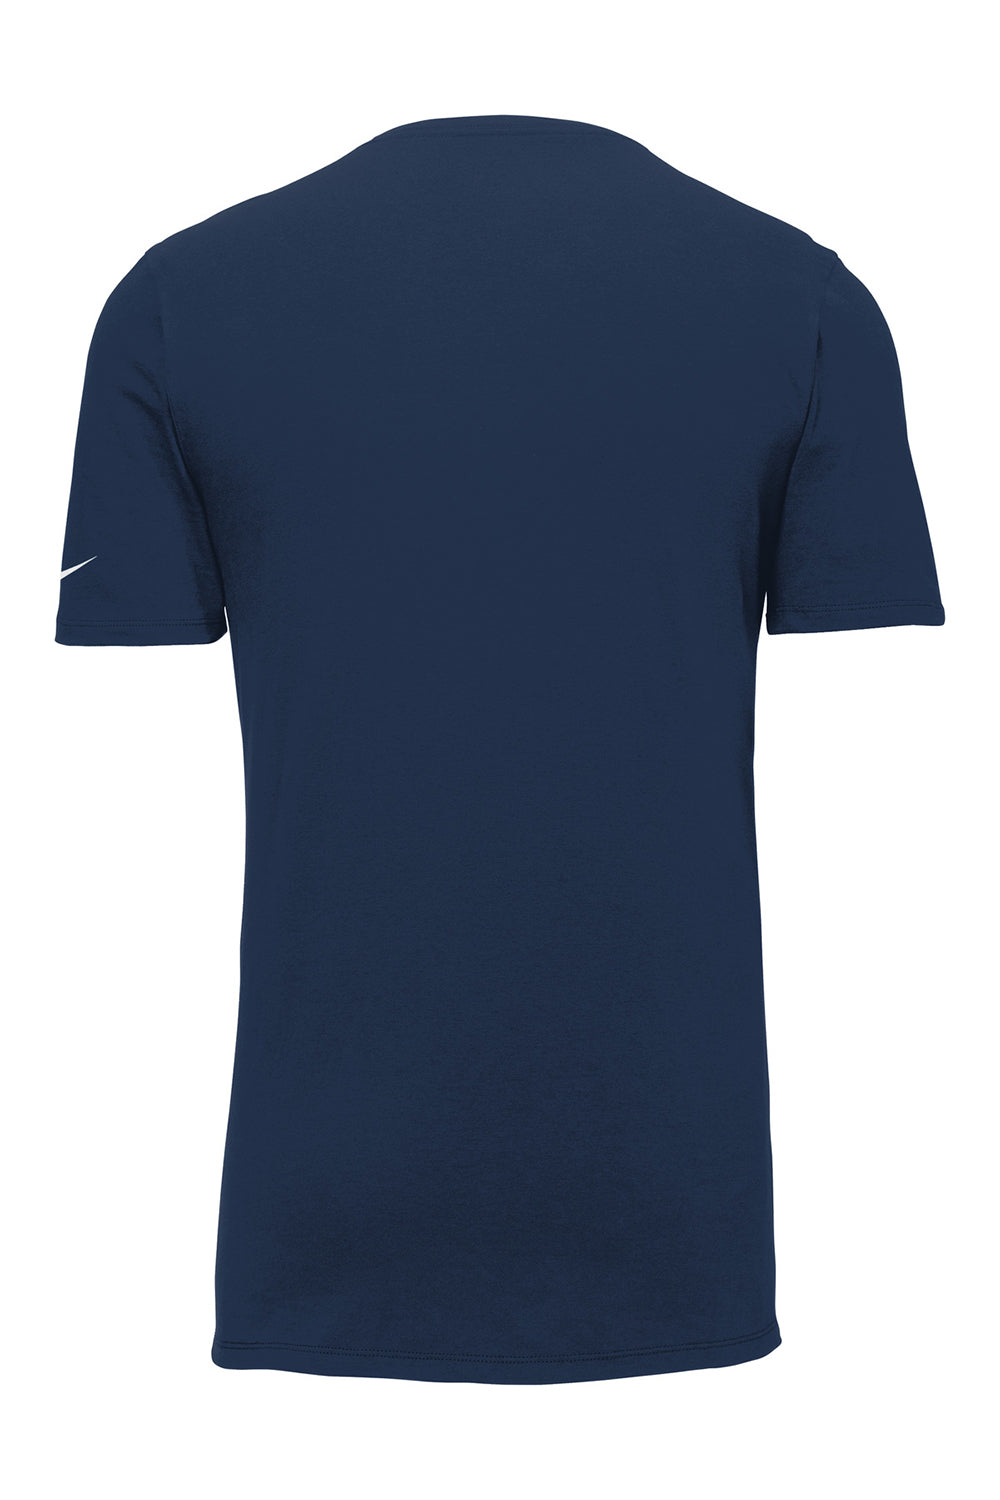 Nike NKBQ5231 Mens Dri-Fit Moisture Wicking Short Sleeve Crewneck T-Shirt College Navy Blue Flat Back